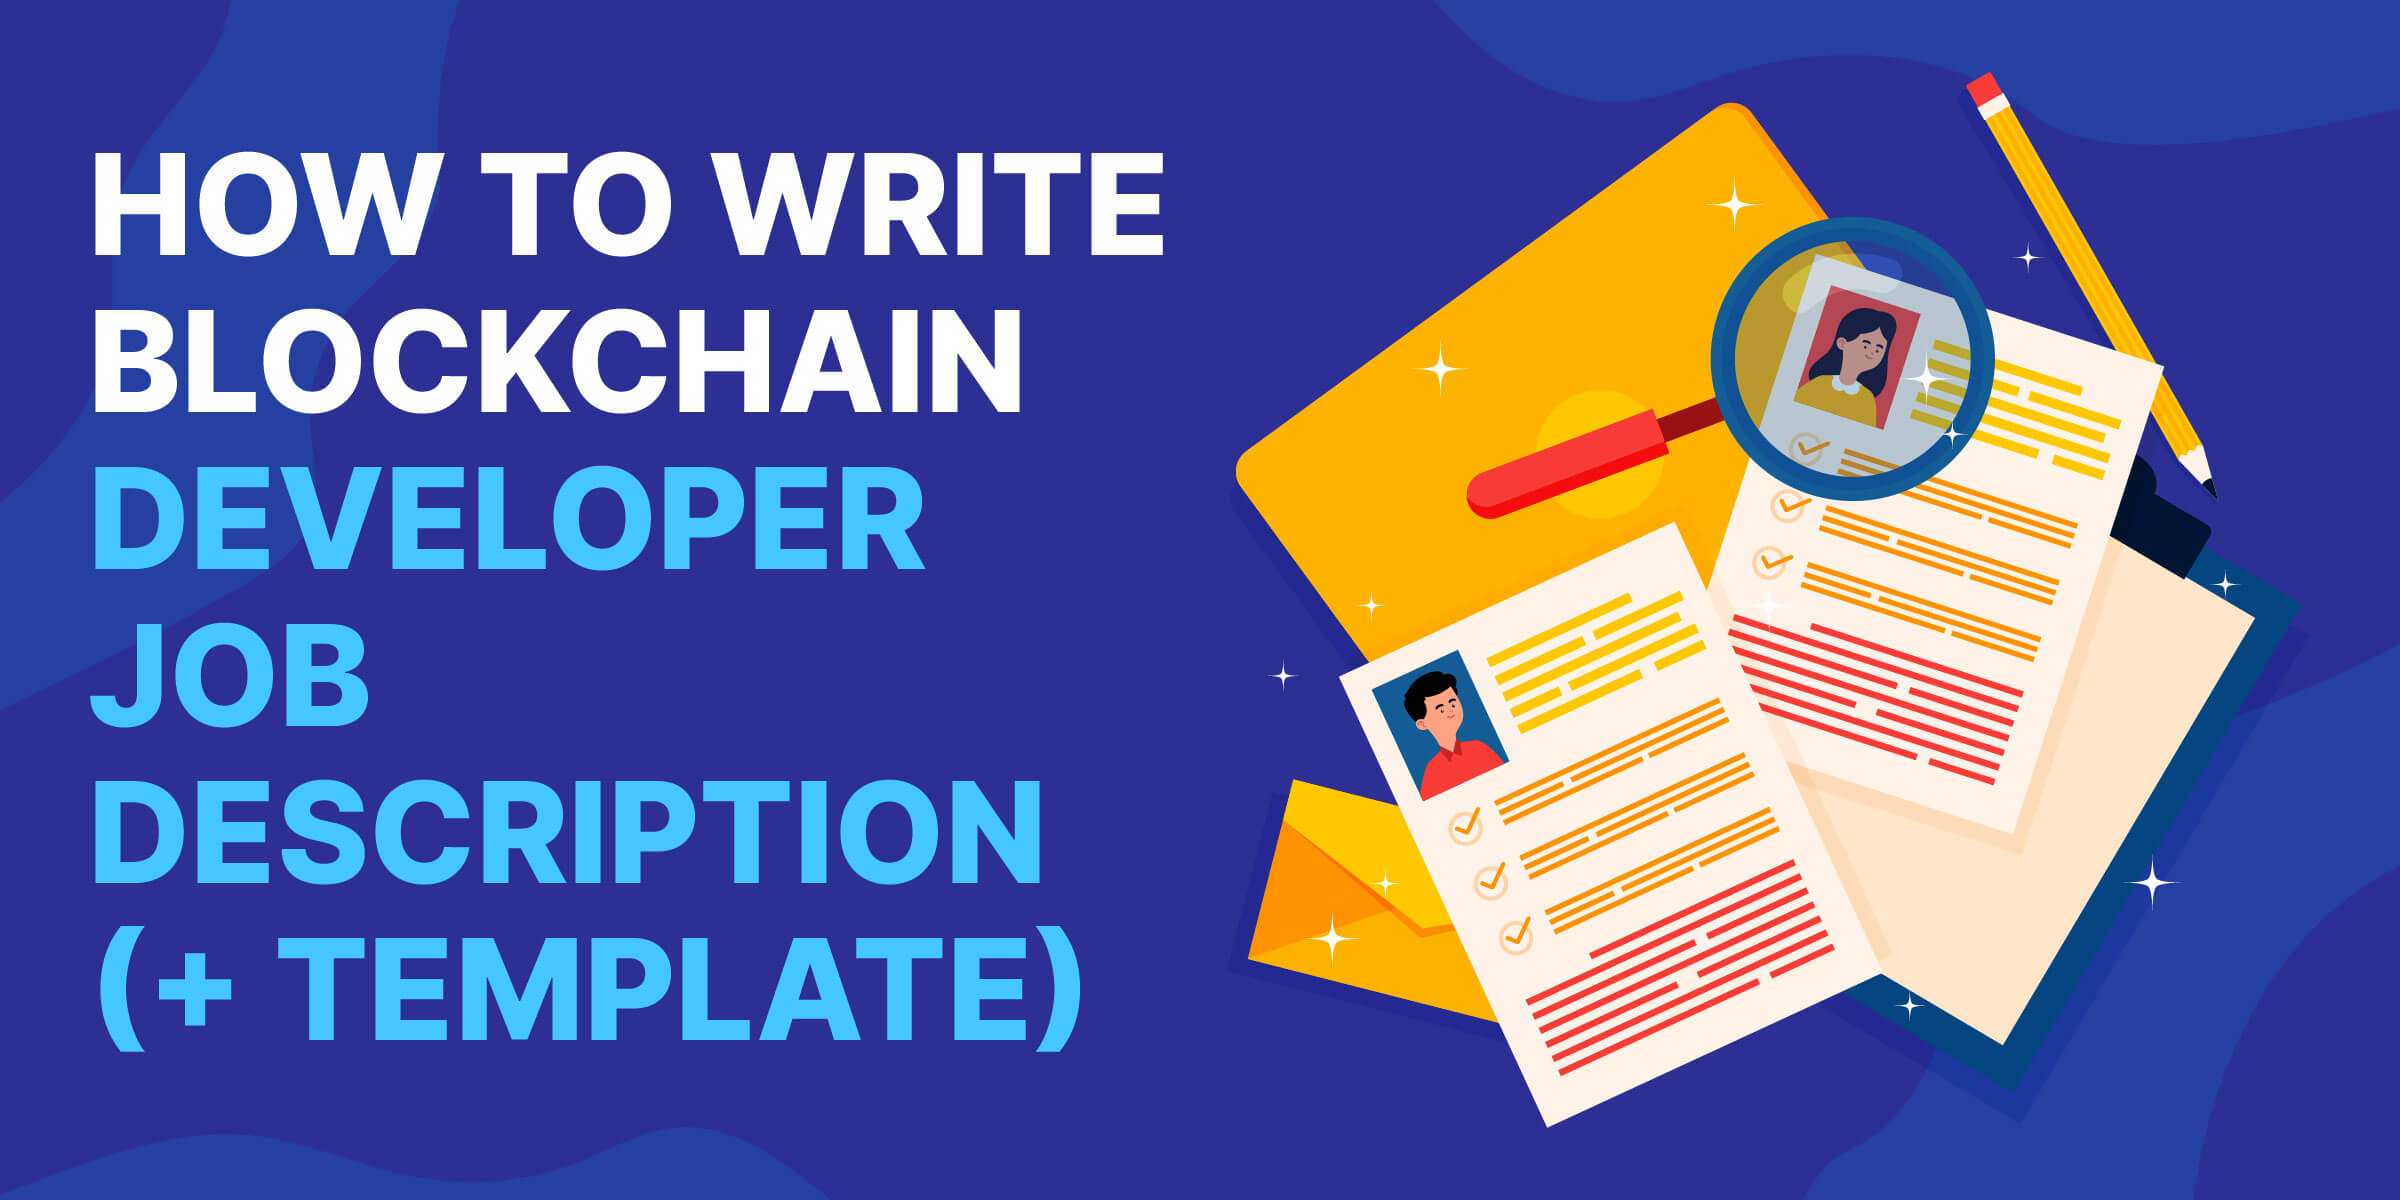 How to Write Blockchain Developer Job Description + Template